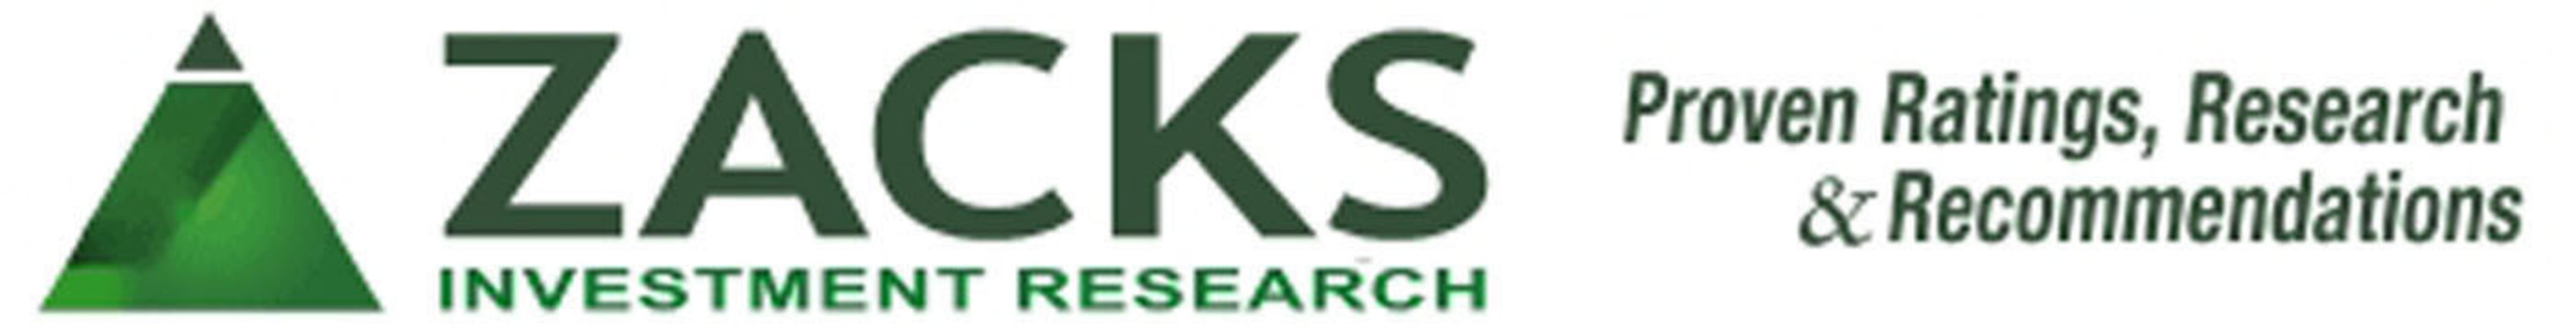 Zacks Investment Research, Inc., www.zacks.com. (PRNewsFoto/Zacks Investment Research) (PRNewsFoto/ZACKS INVESTMENT RESEARCH)